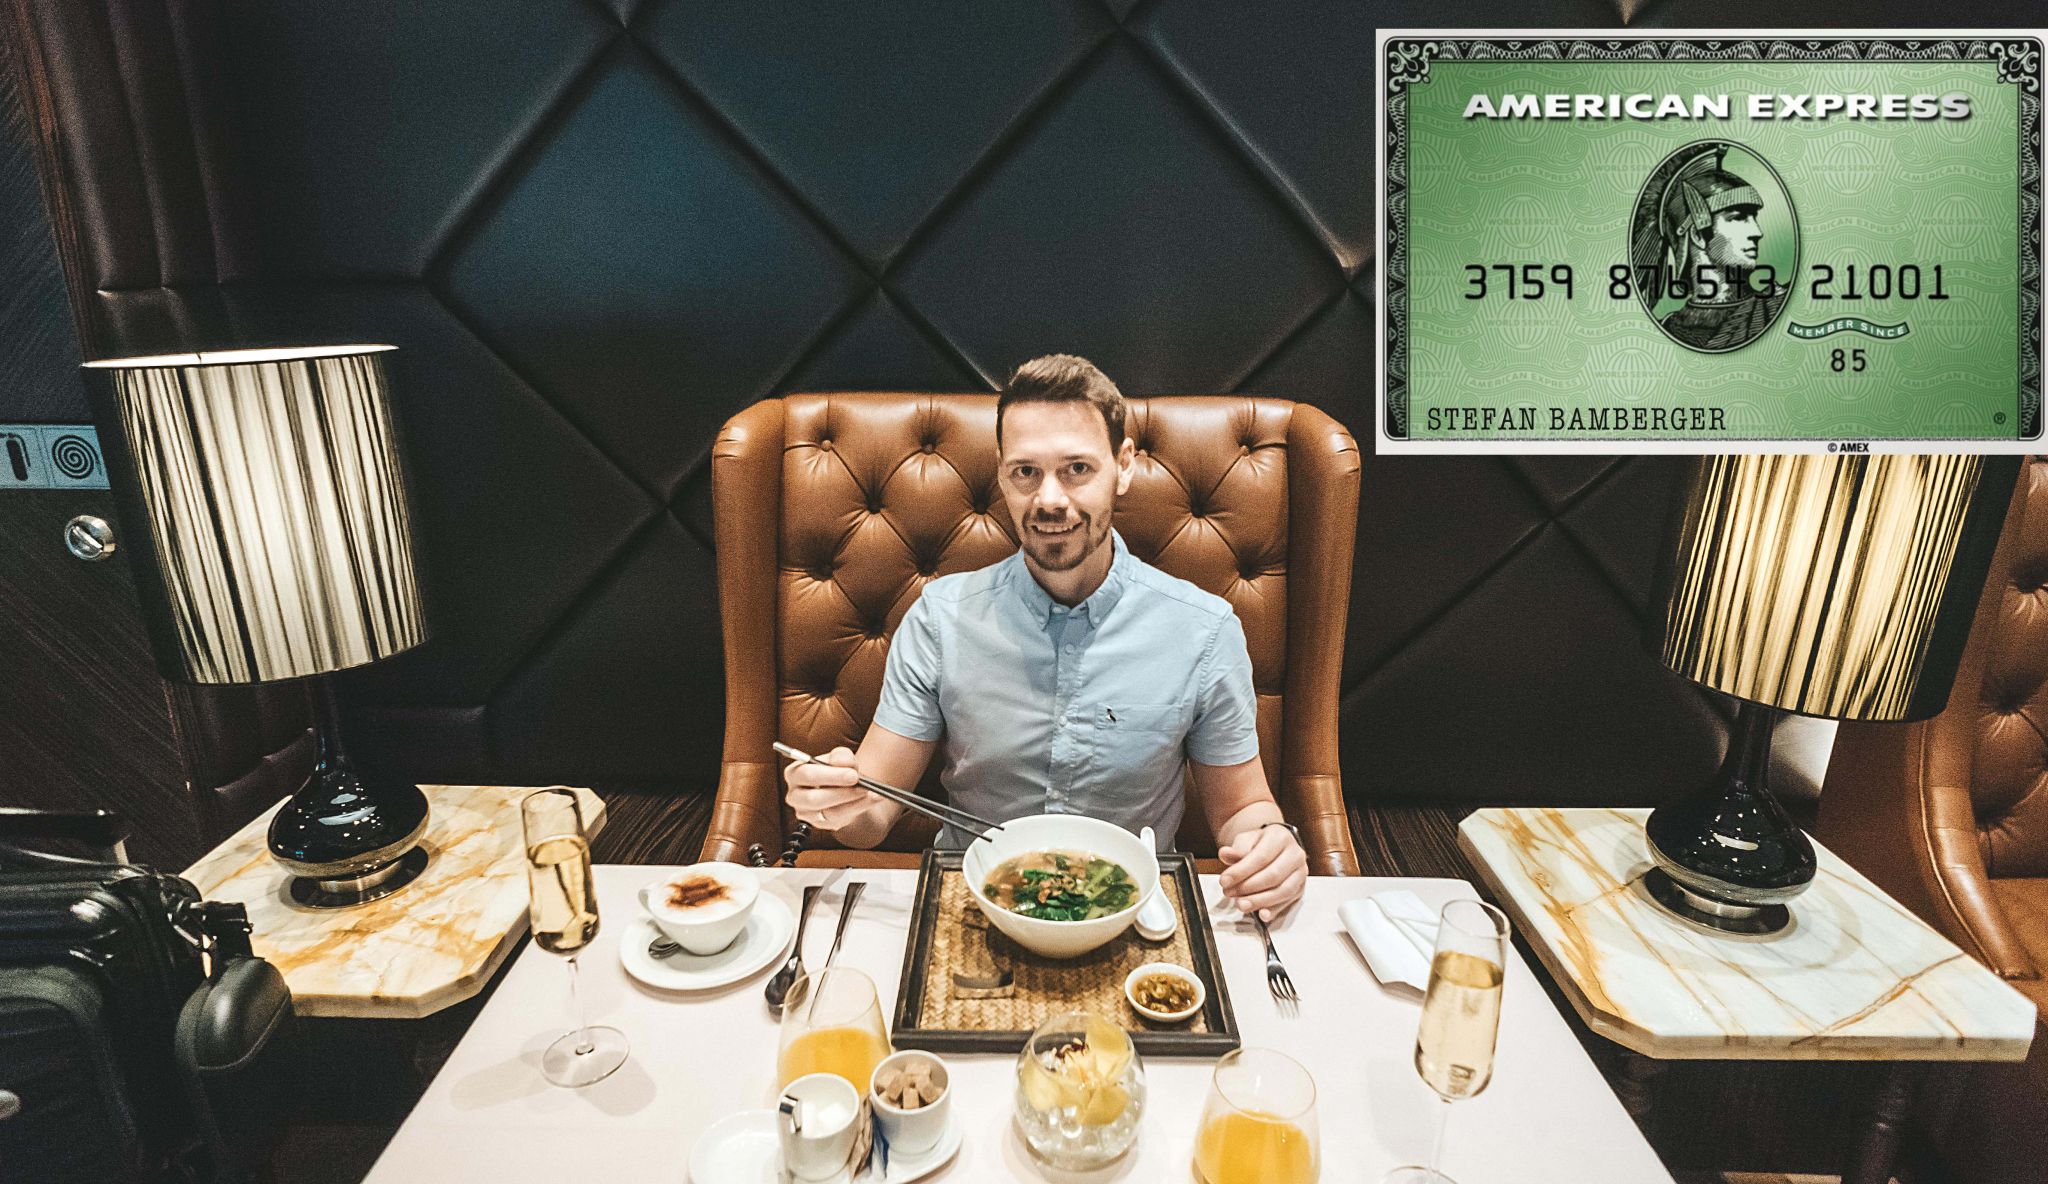 2019 09 XX Amex Green American Express